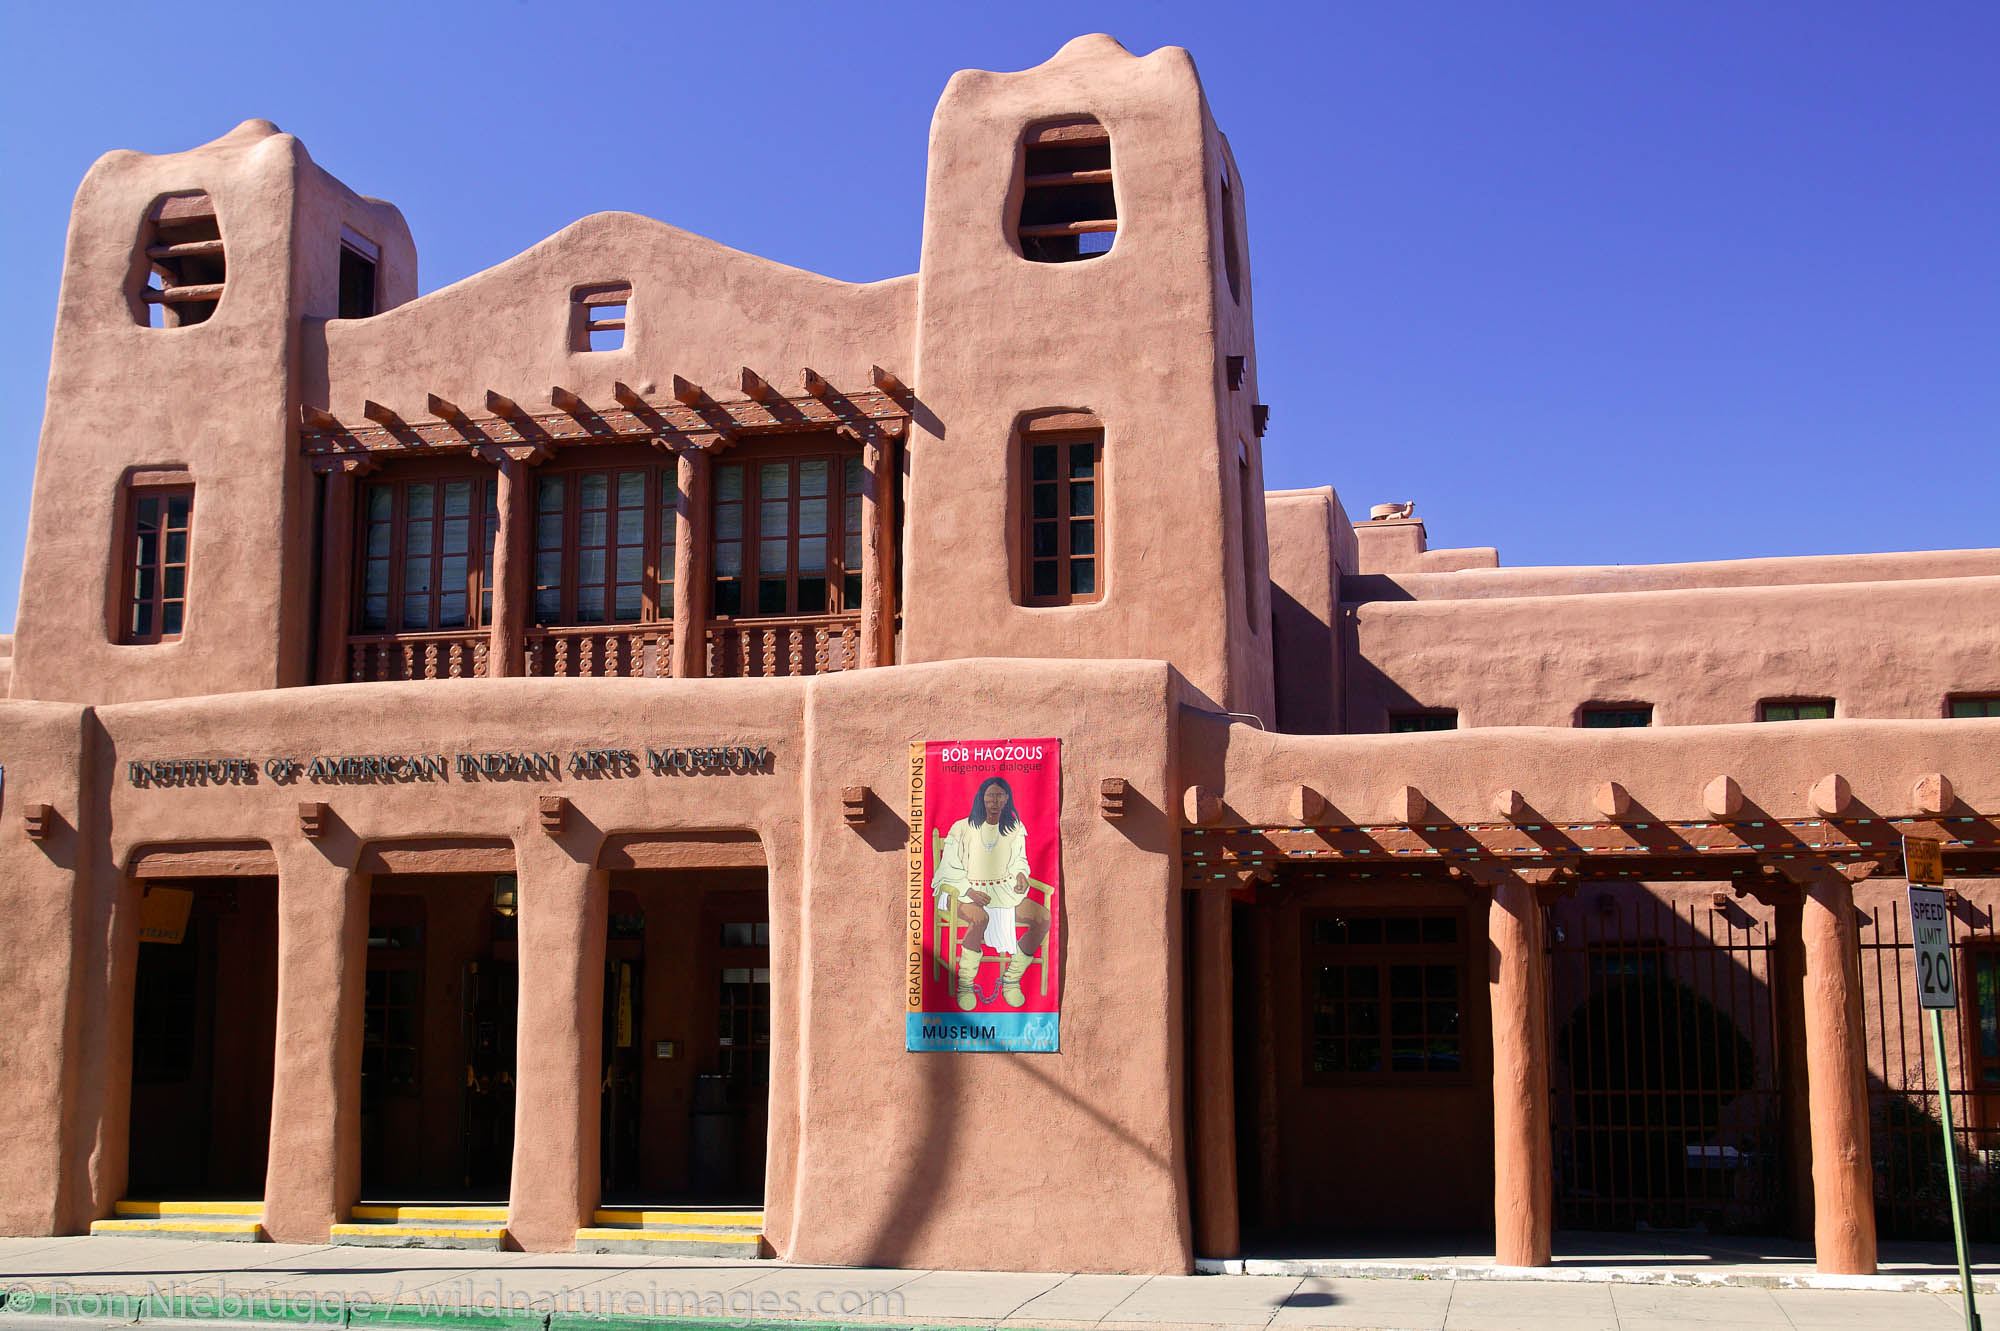 Institute of American Indian Arts Museum, Santa Fe, New Mexico.